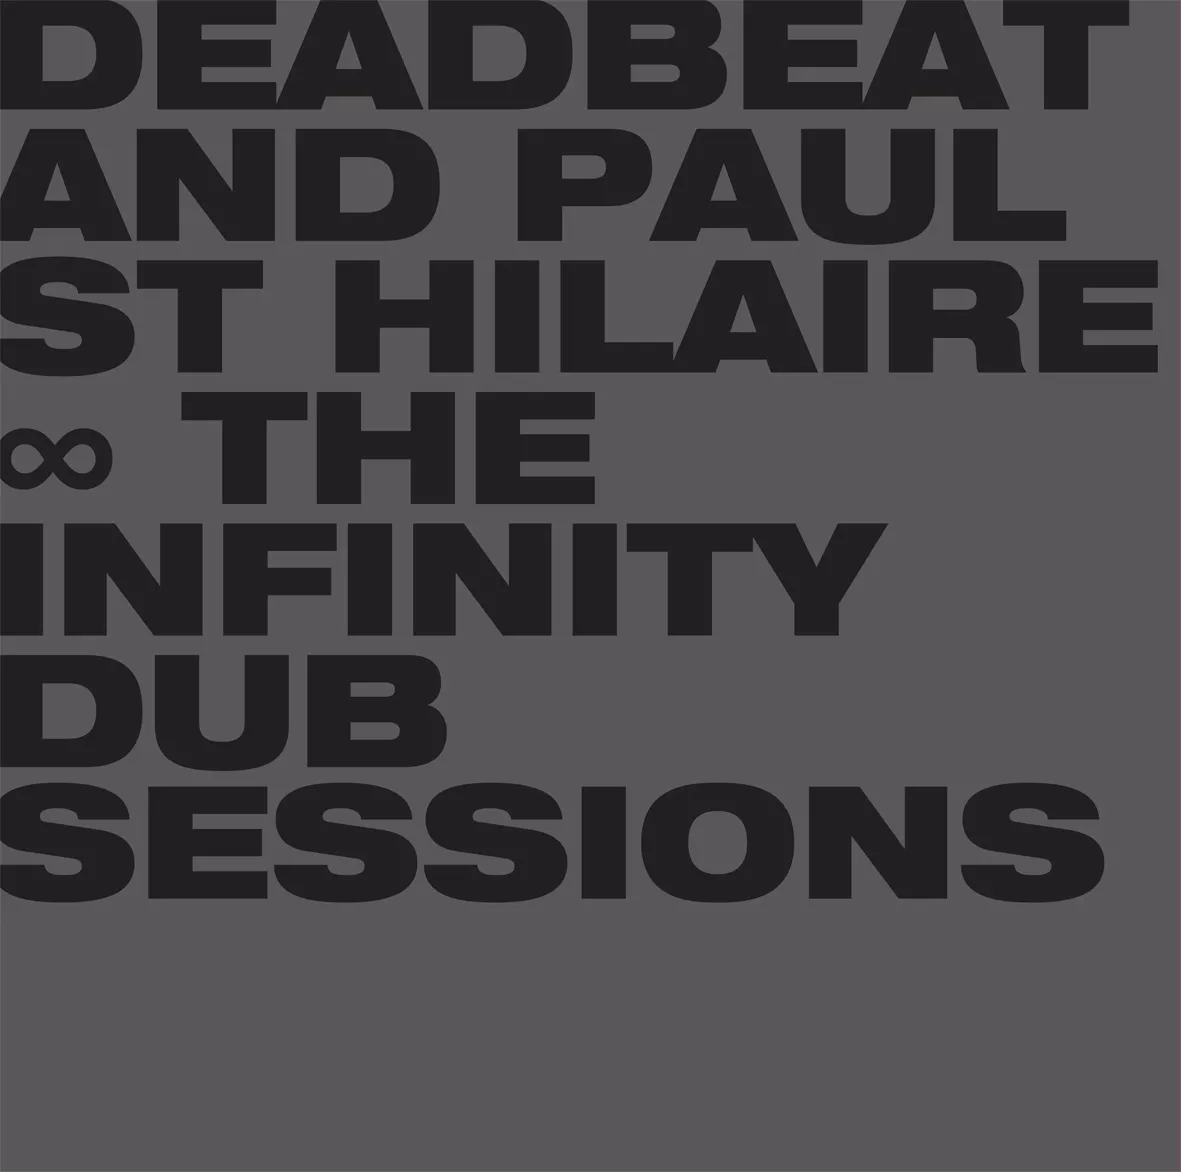 Infinity Dub Sessions - Deadbeat